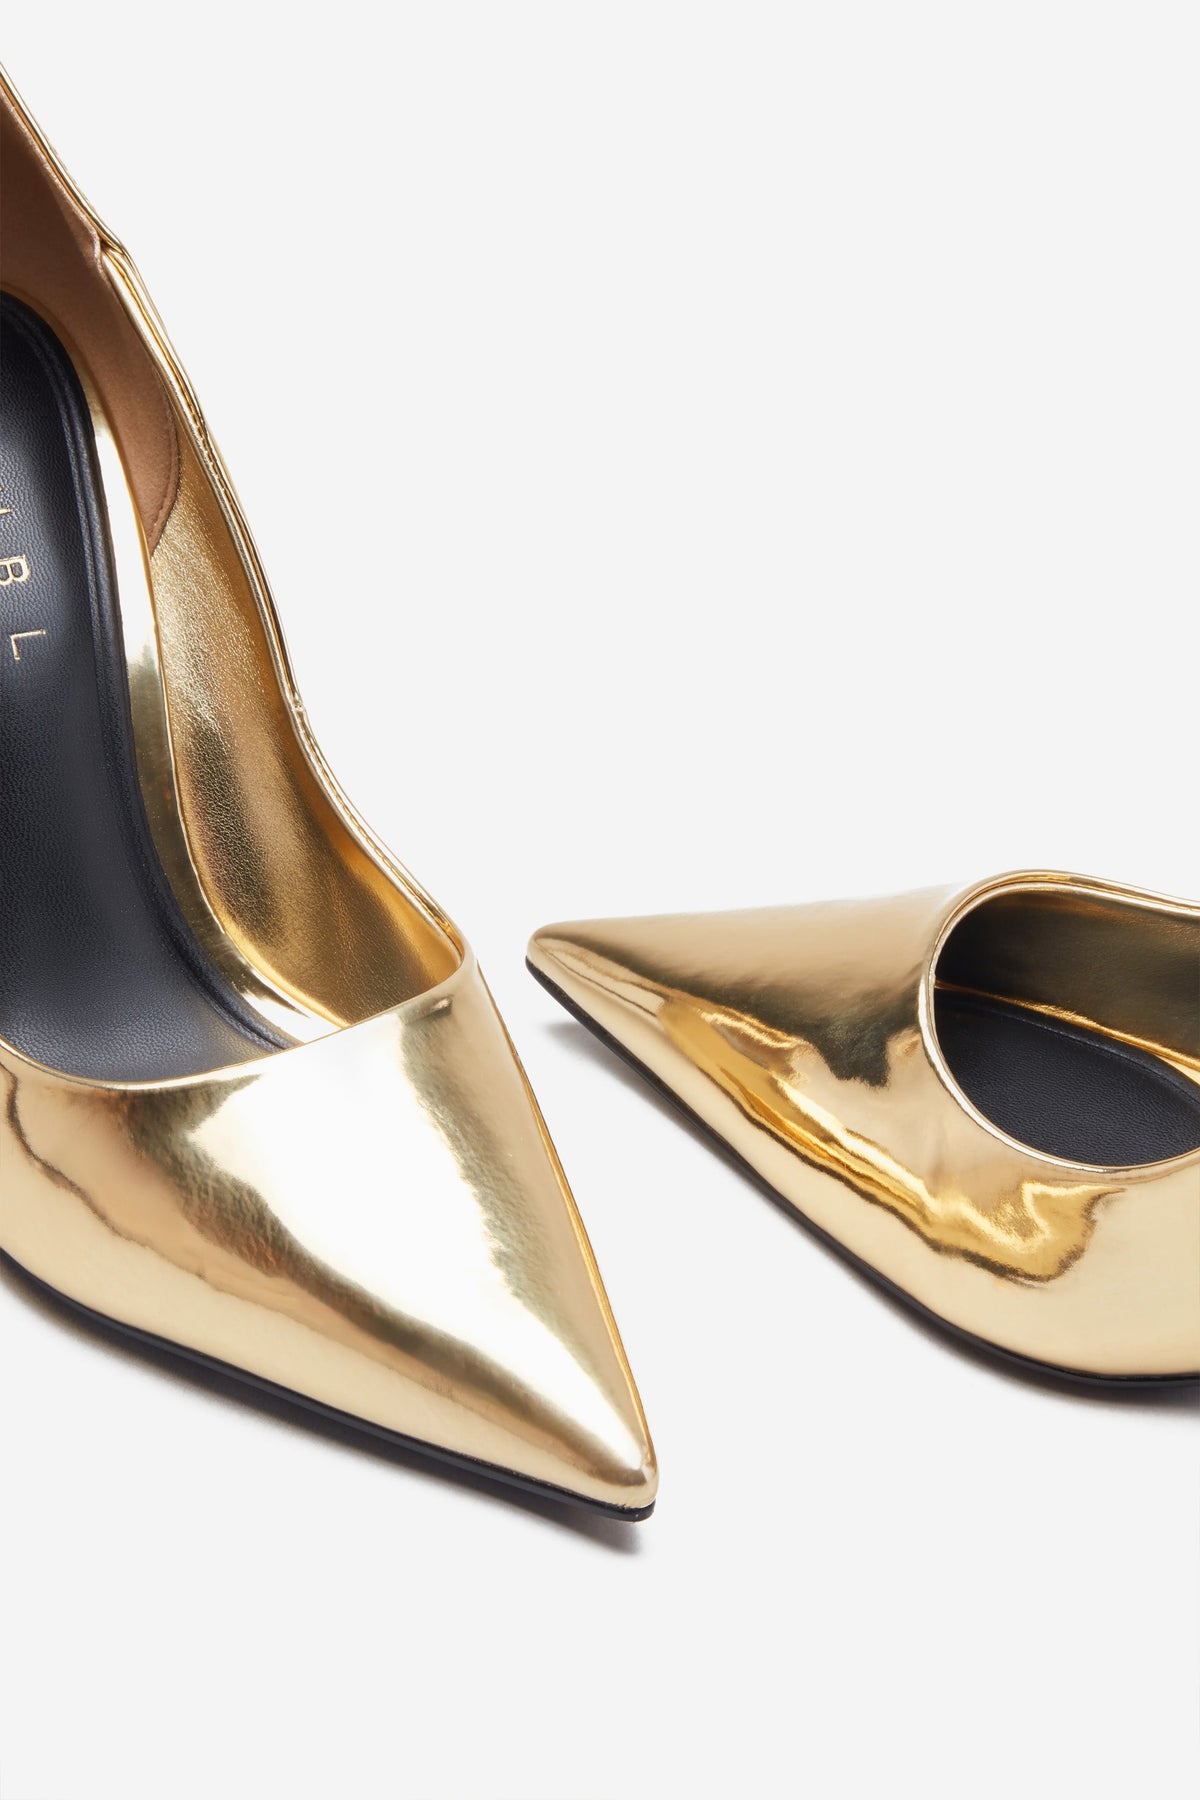 Gold Woman Shoes Heel Wedding | Women Gold Shoes Medium Heels - Pointed Toe  Crystal - Aliexpress